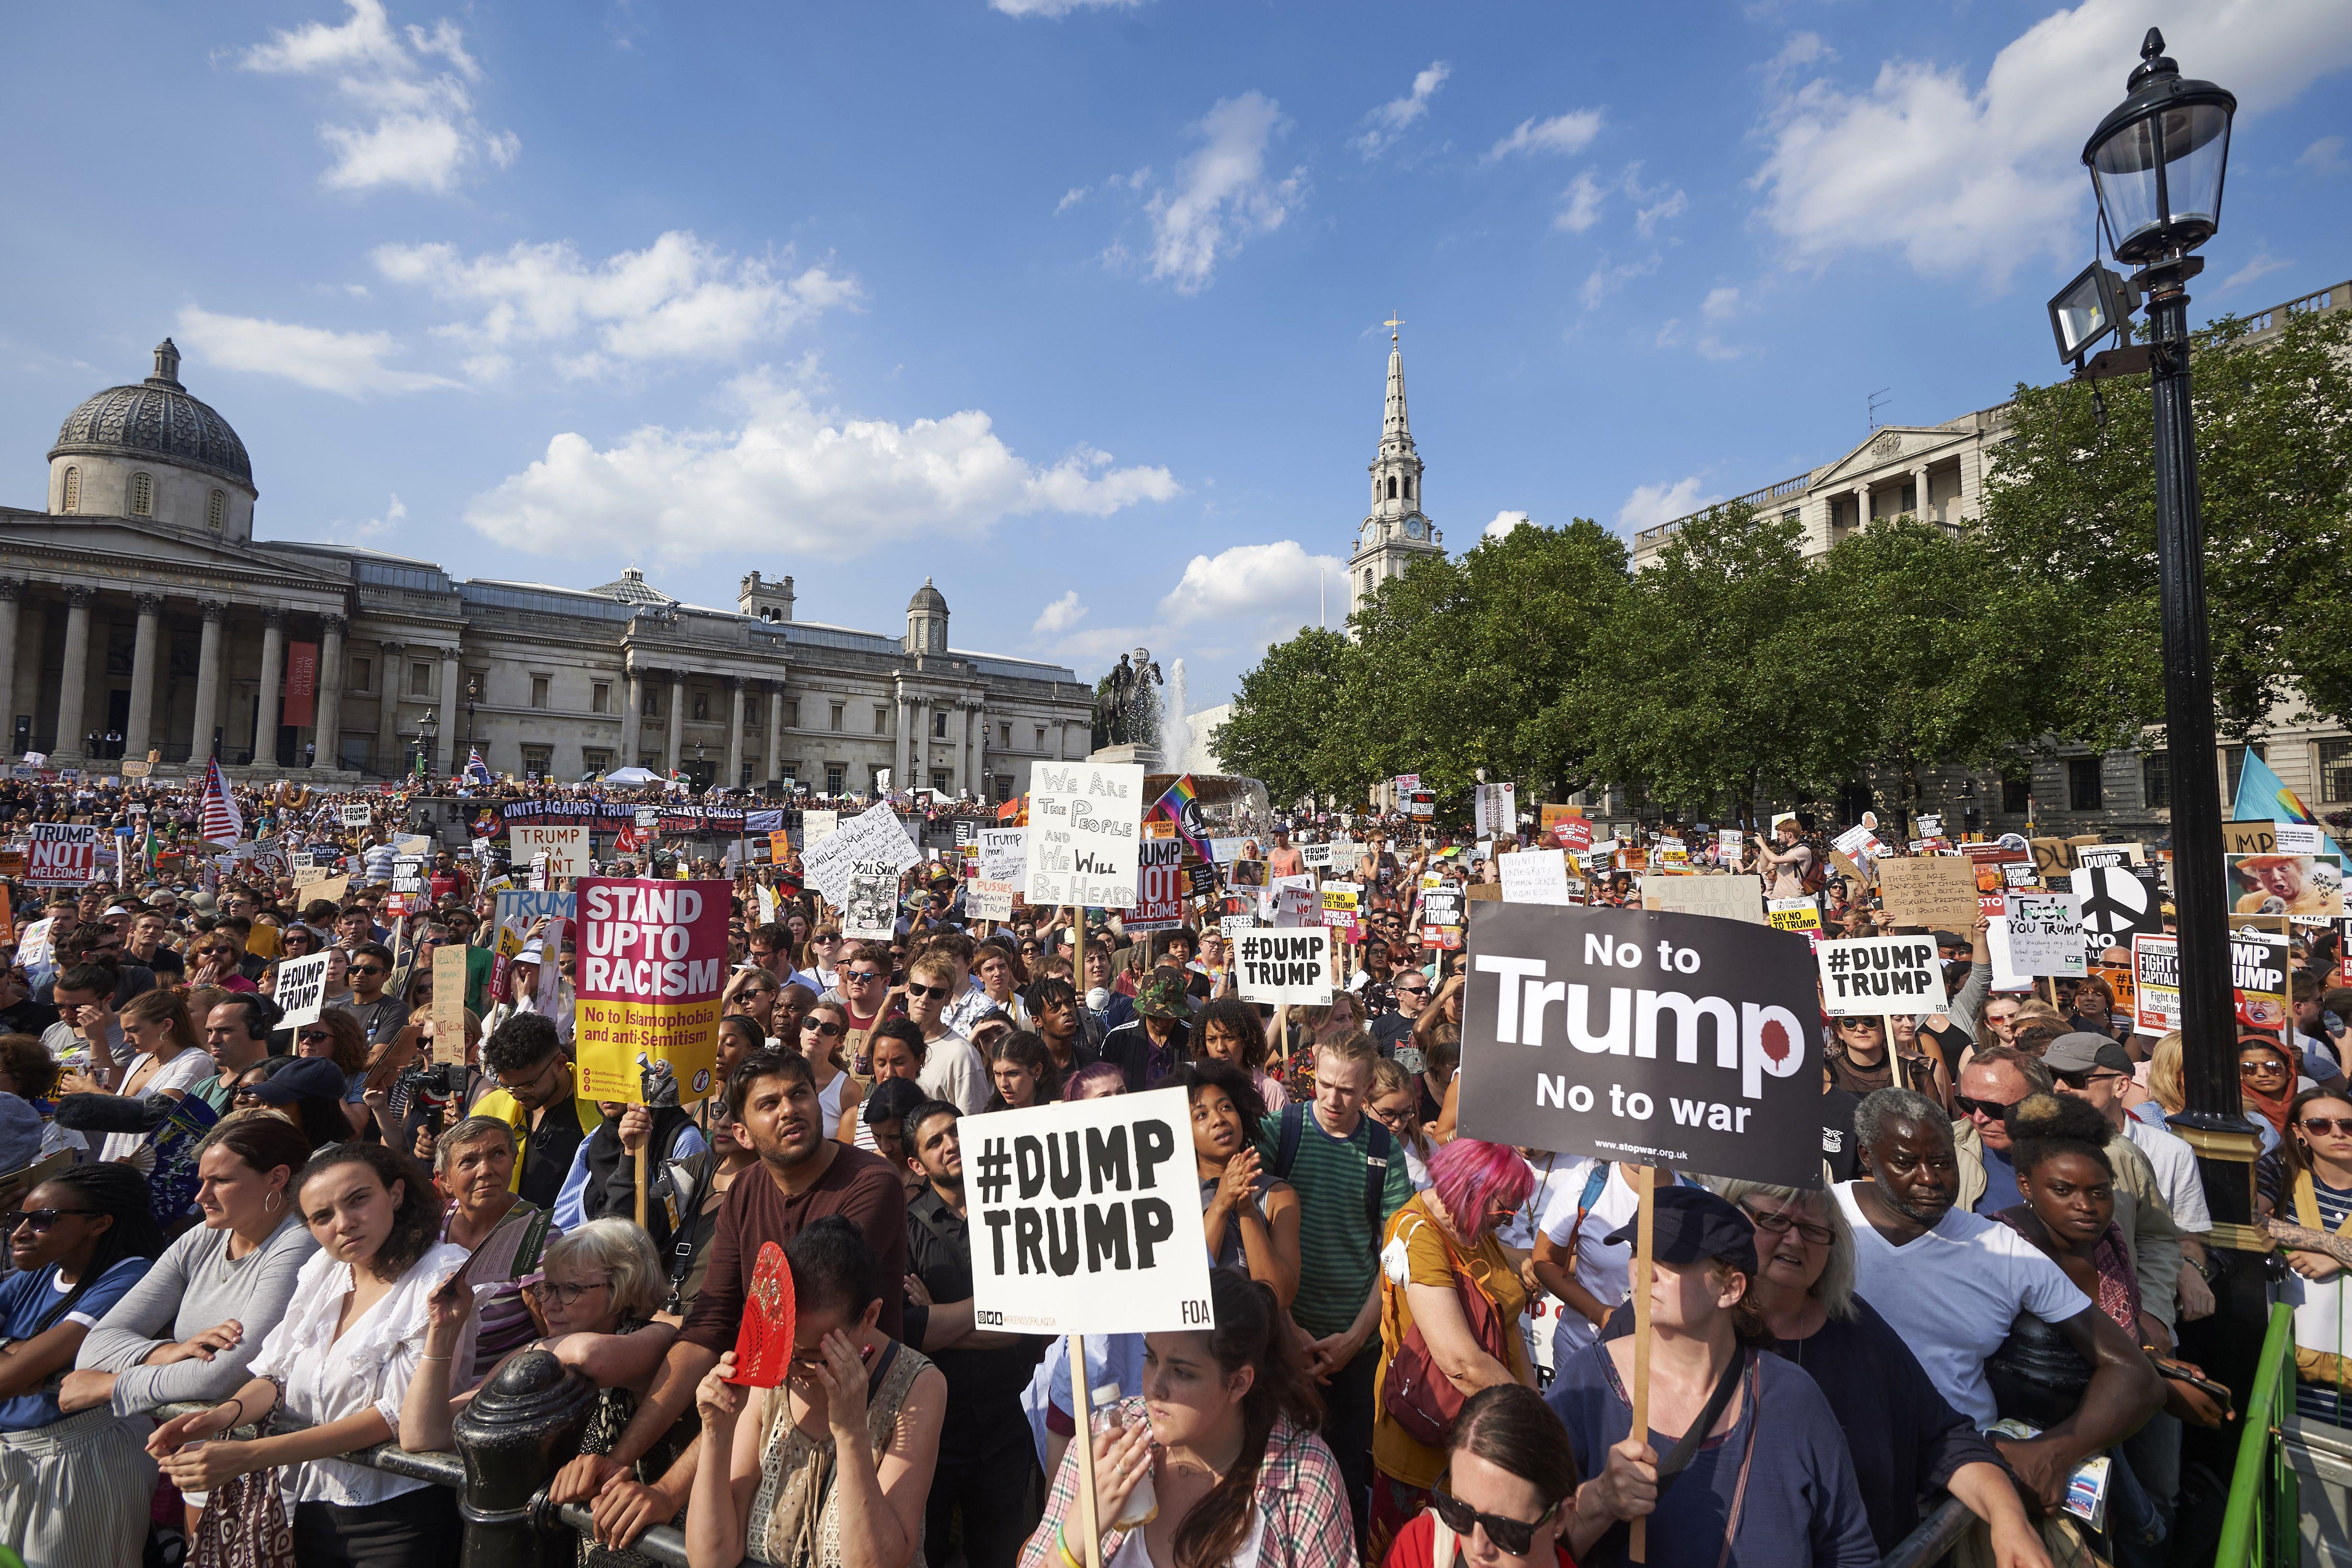 Protesters gather in London's Trafalgar Square.